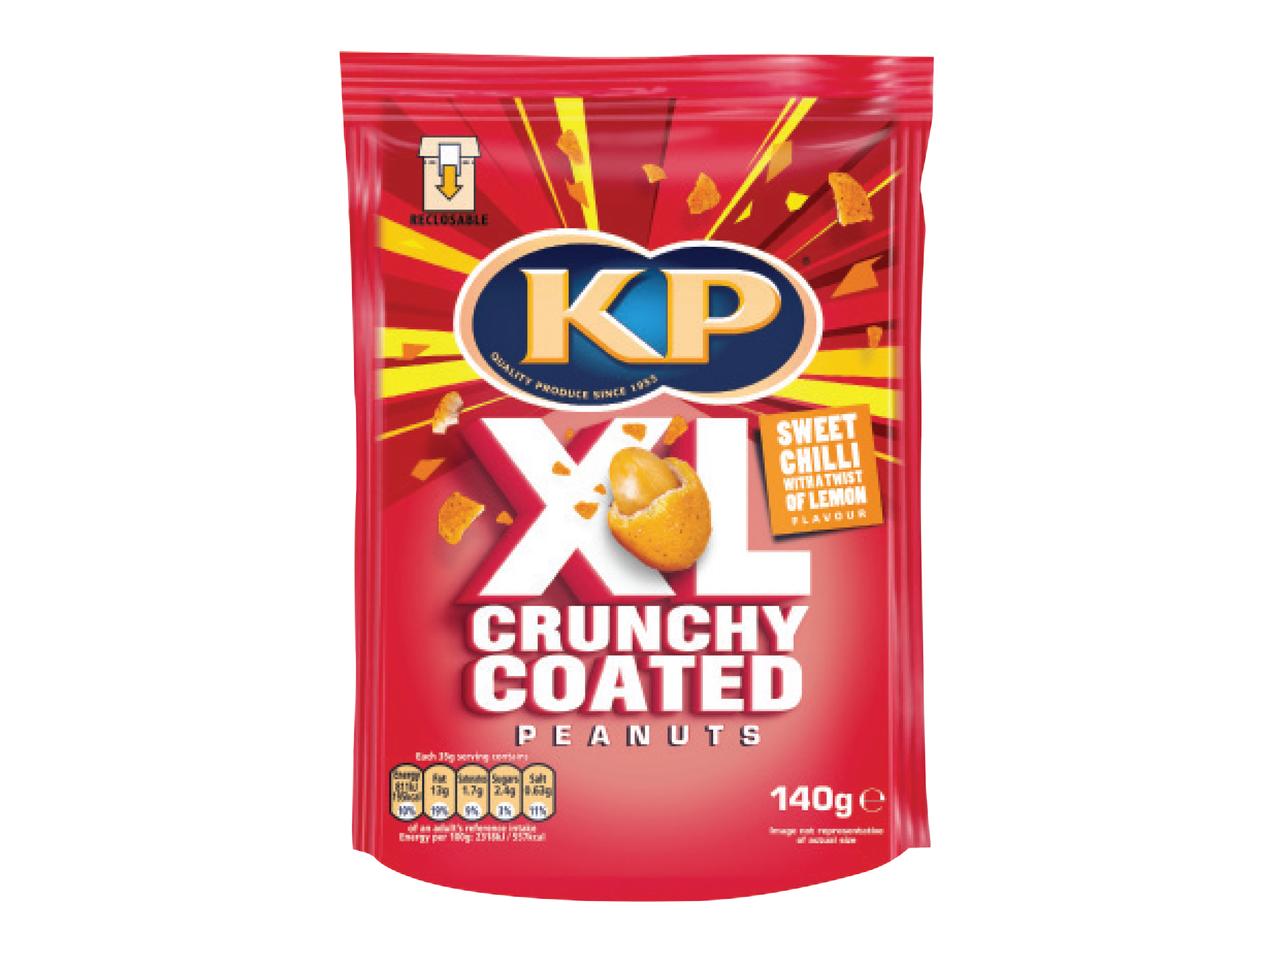 KP XL Crunchy Coated Peanuts - Sweet Chilli